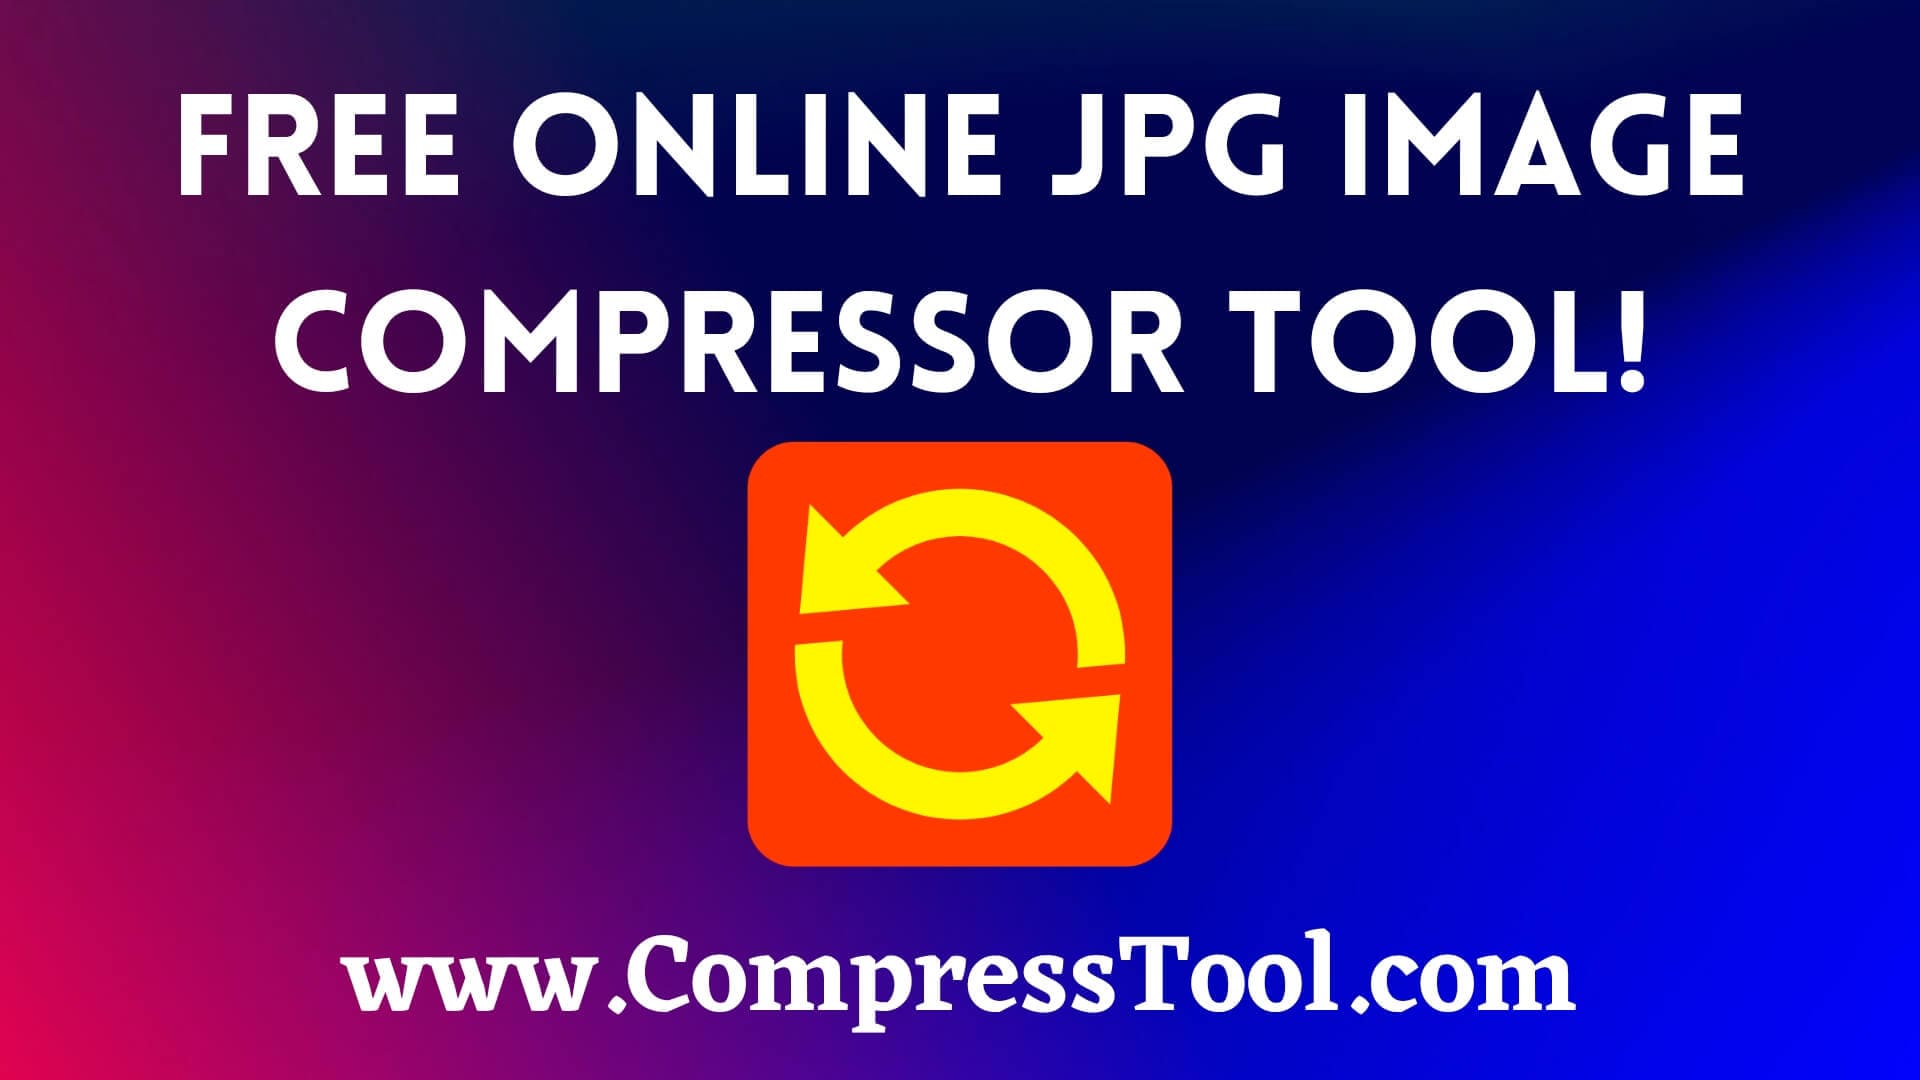 JPEG Image Compress and File Size Reducer 100 kb